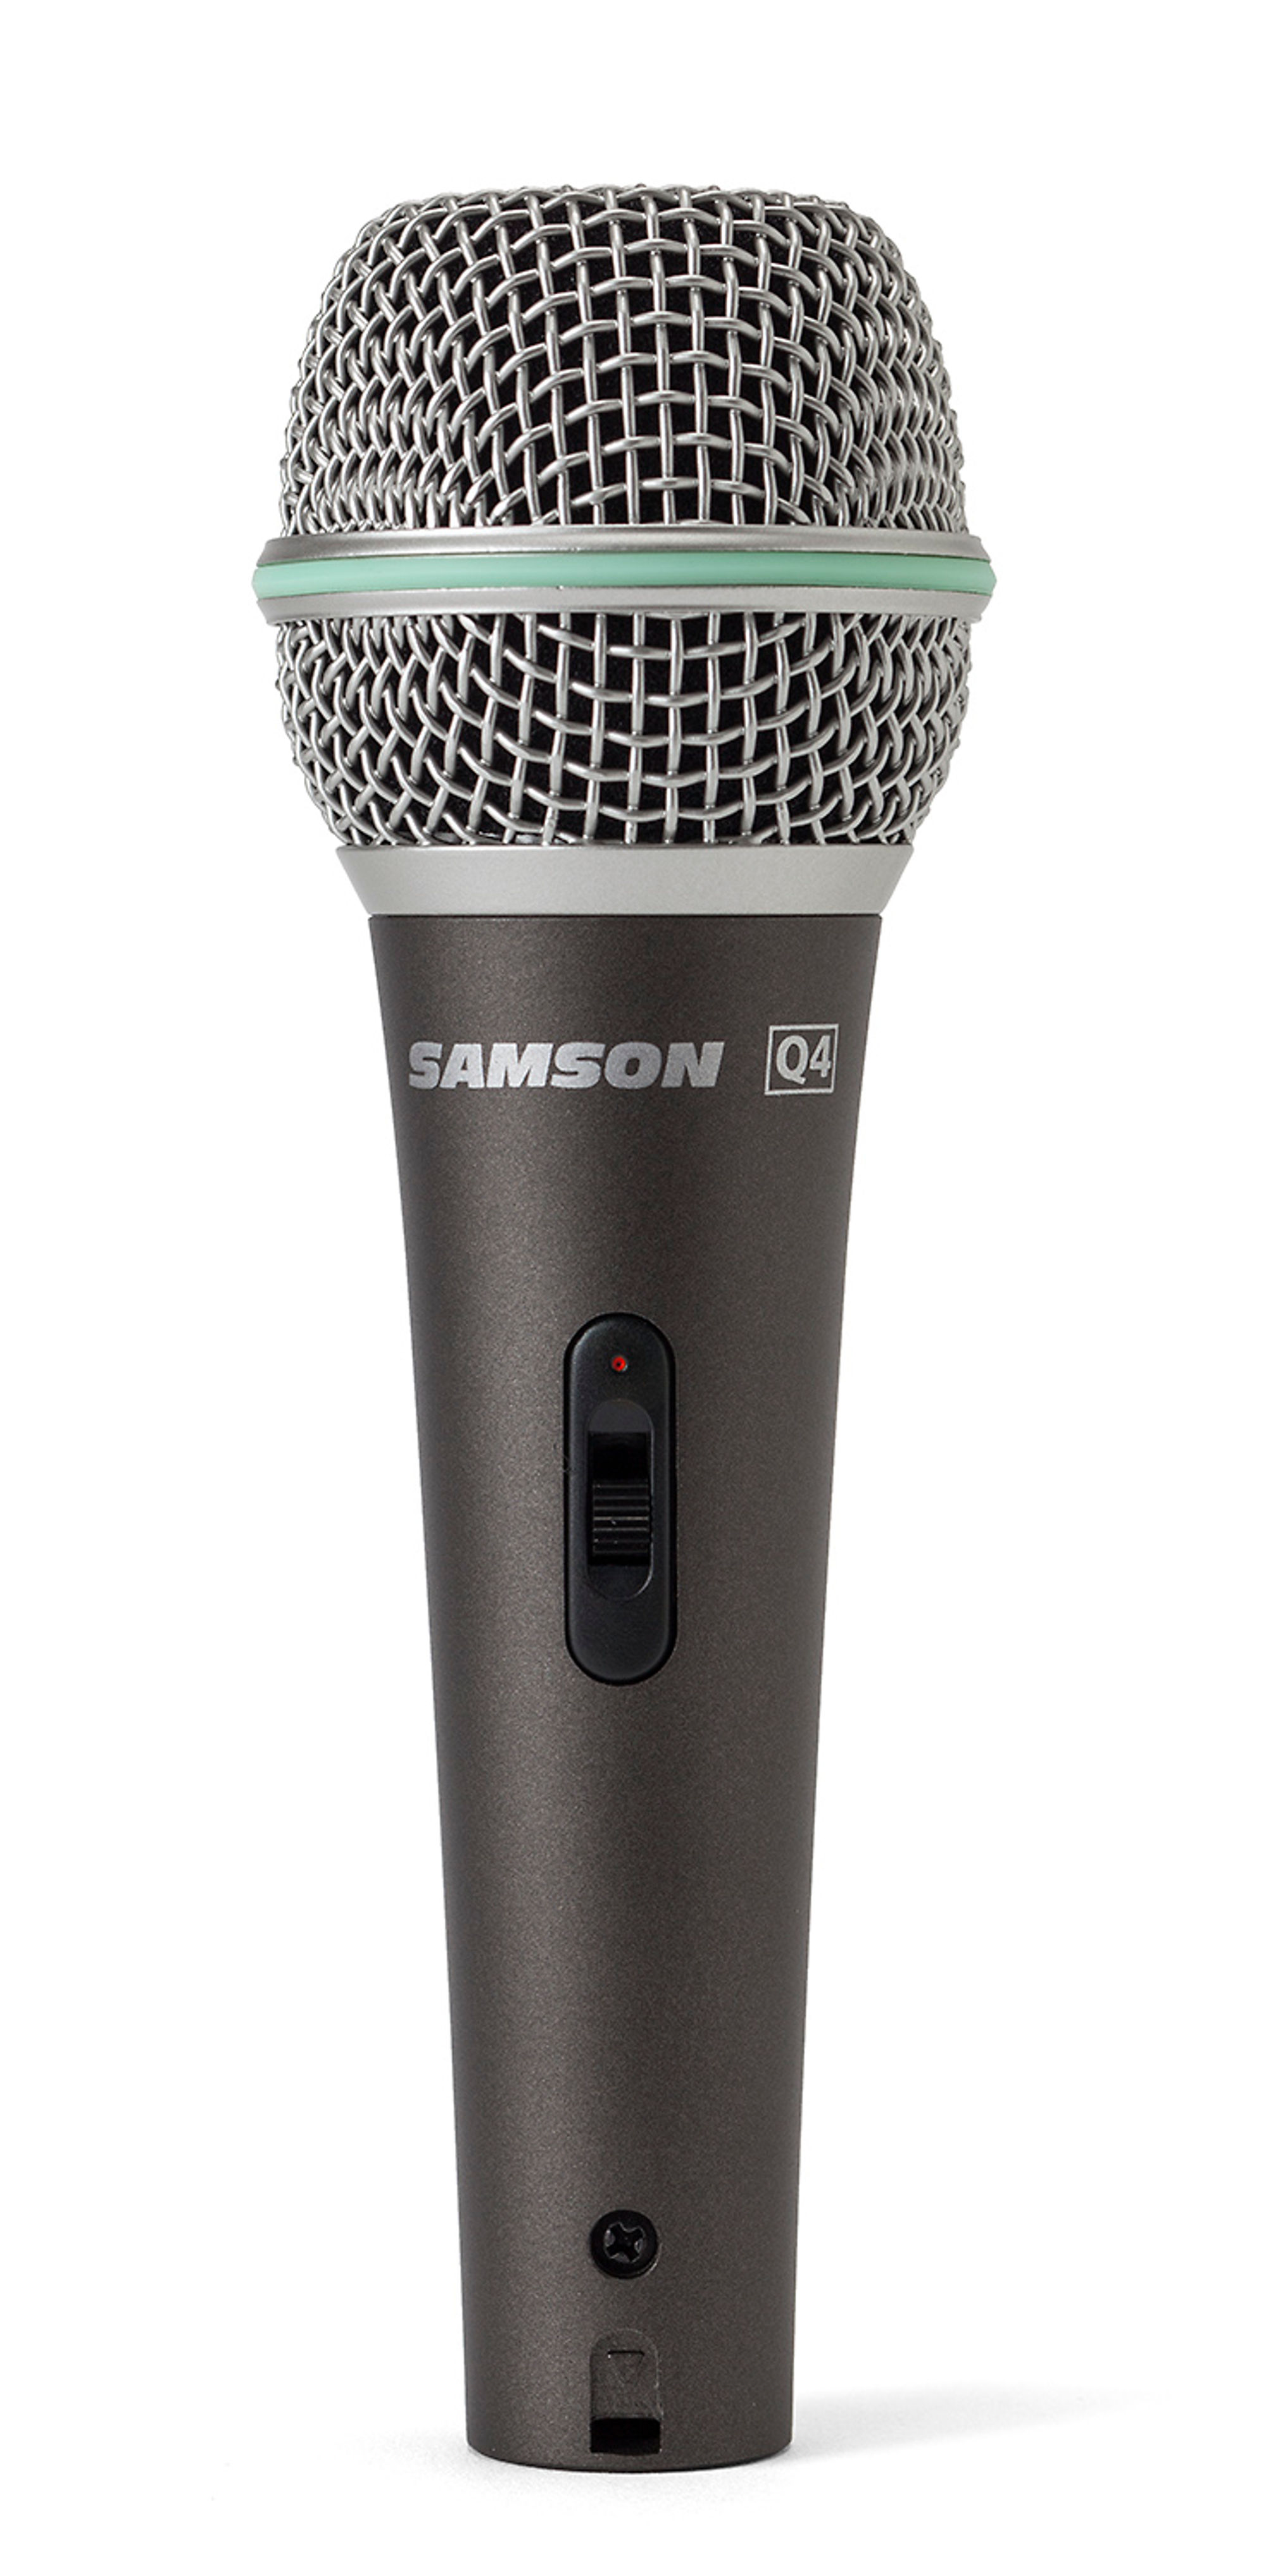 Q4 dynamic microphone